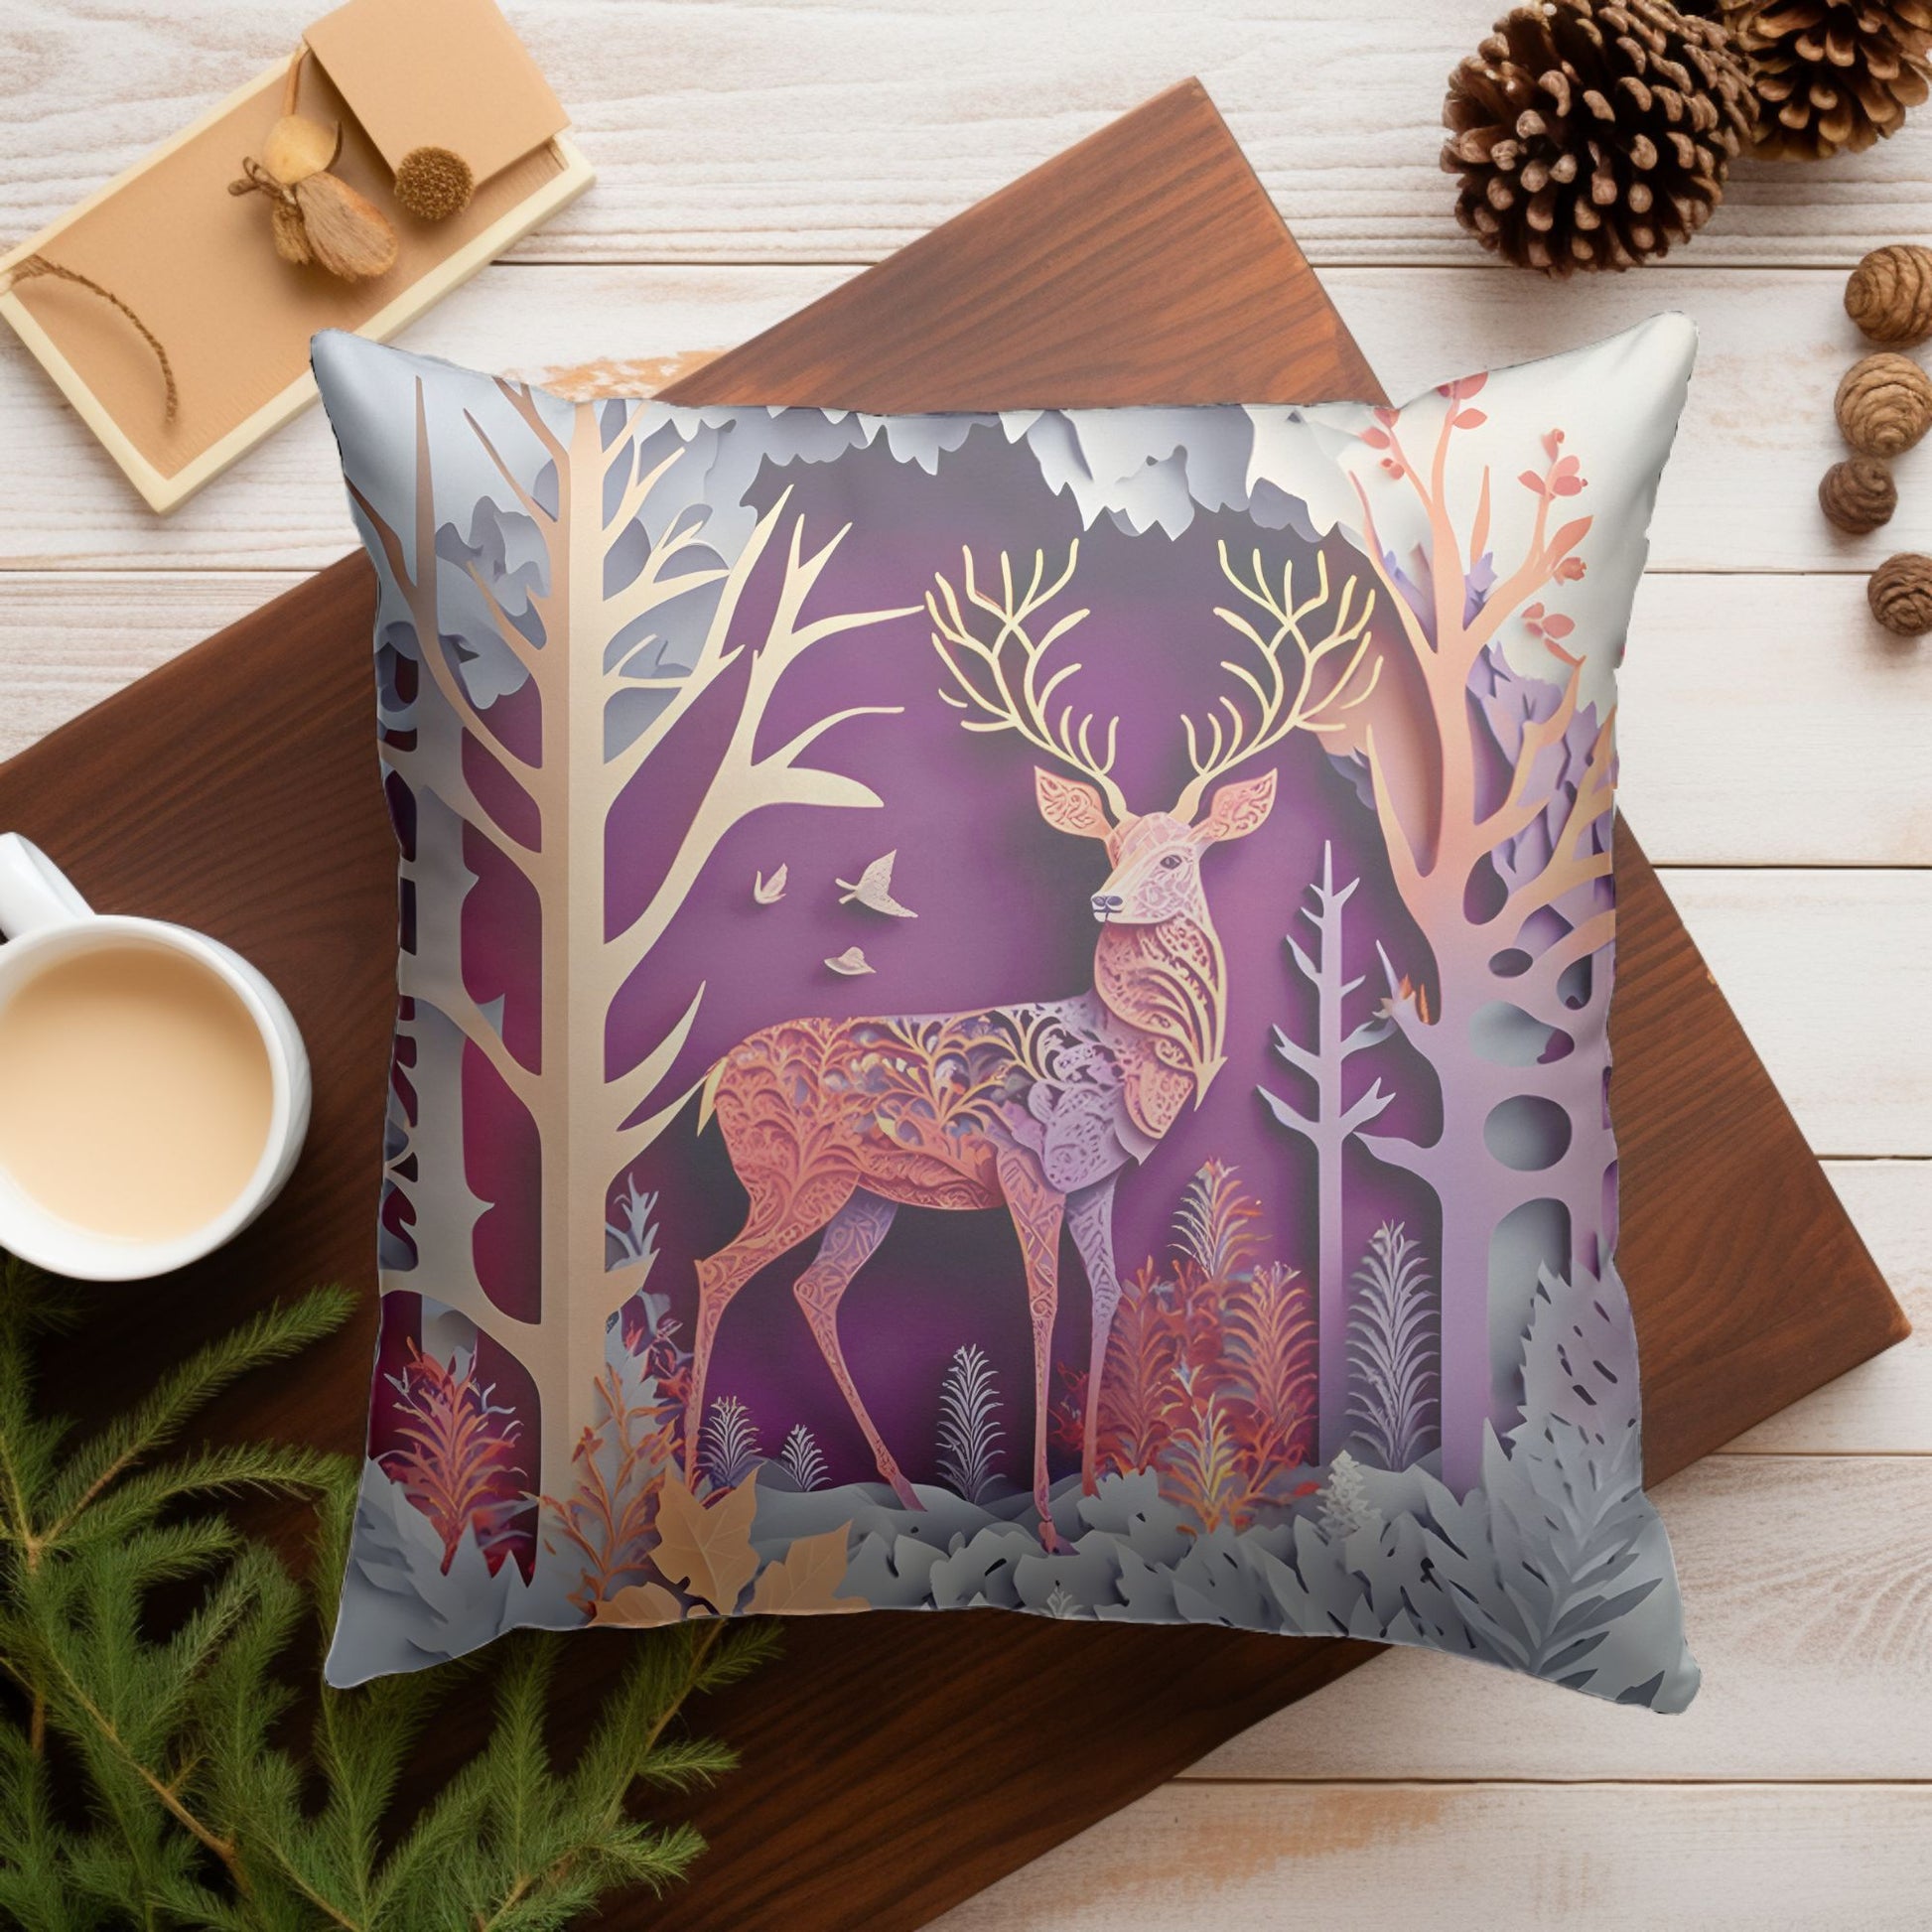 Reindeer Theme Pillow Cover for Seasonal Whimsy